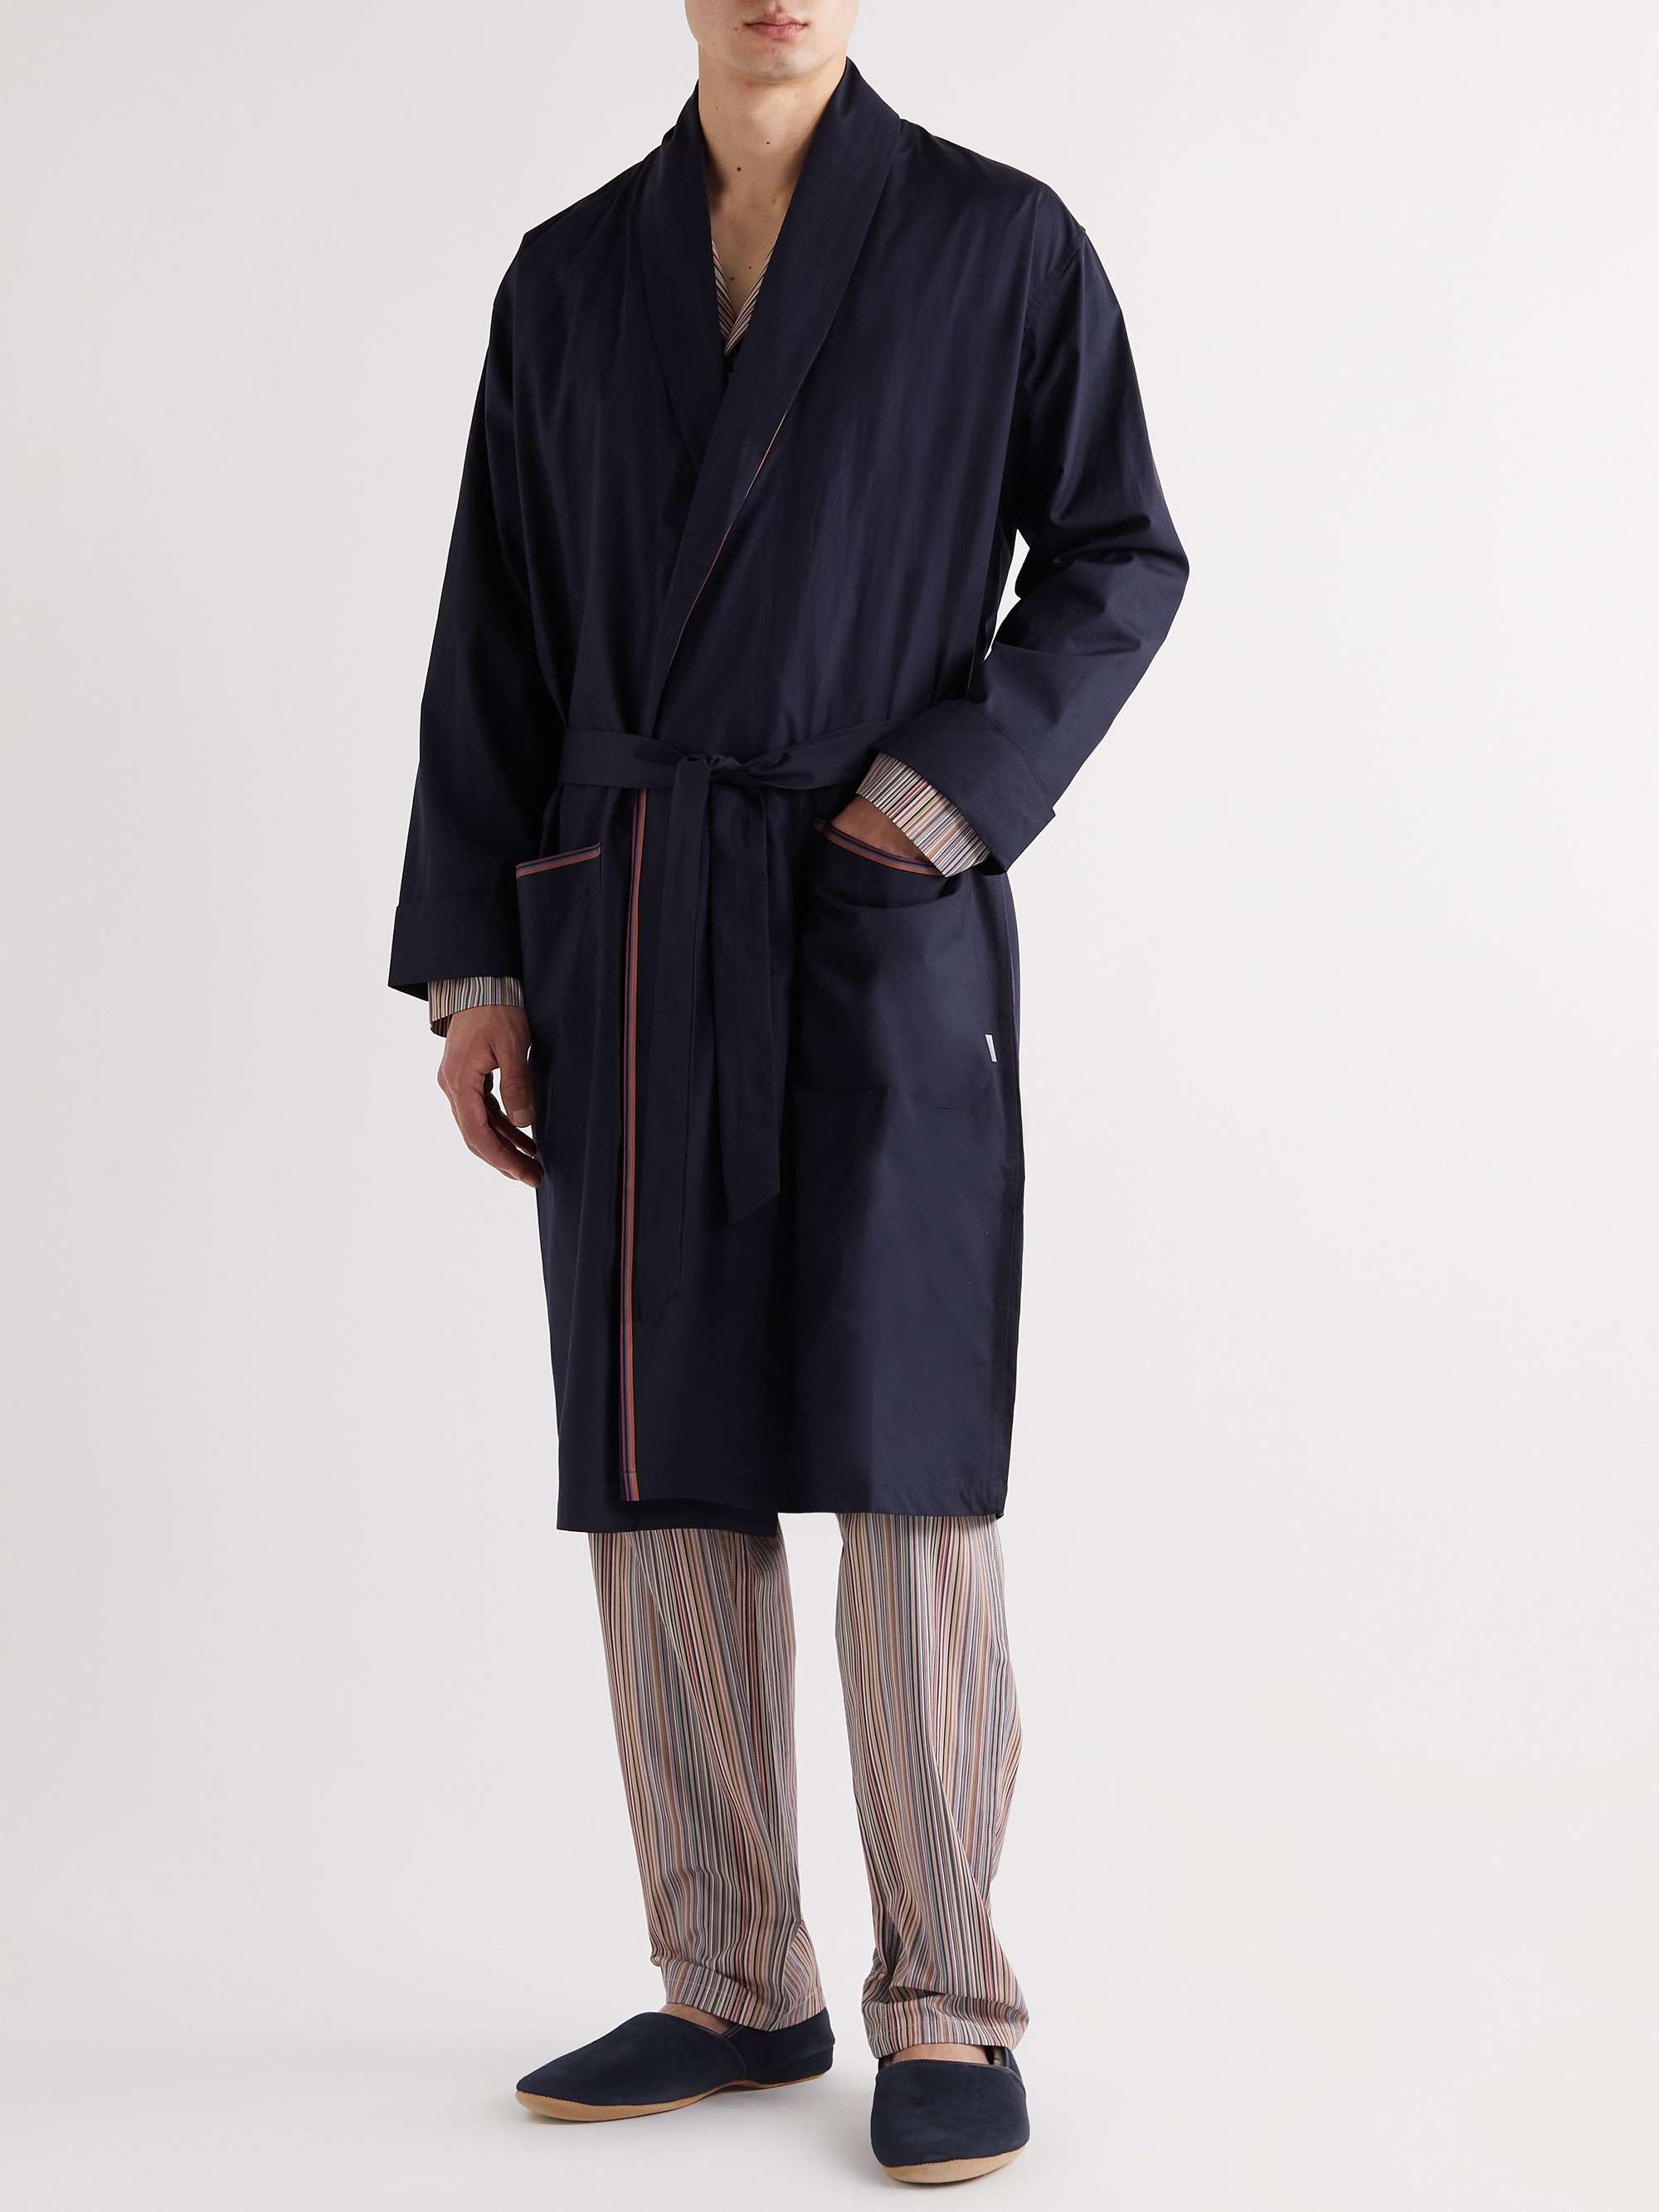 PAUL SMITH Cotton-Poplin Robe for Men | MR PORTER